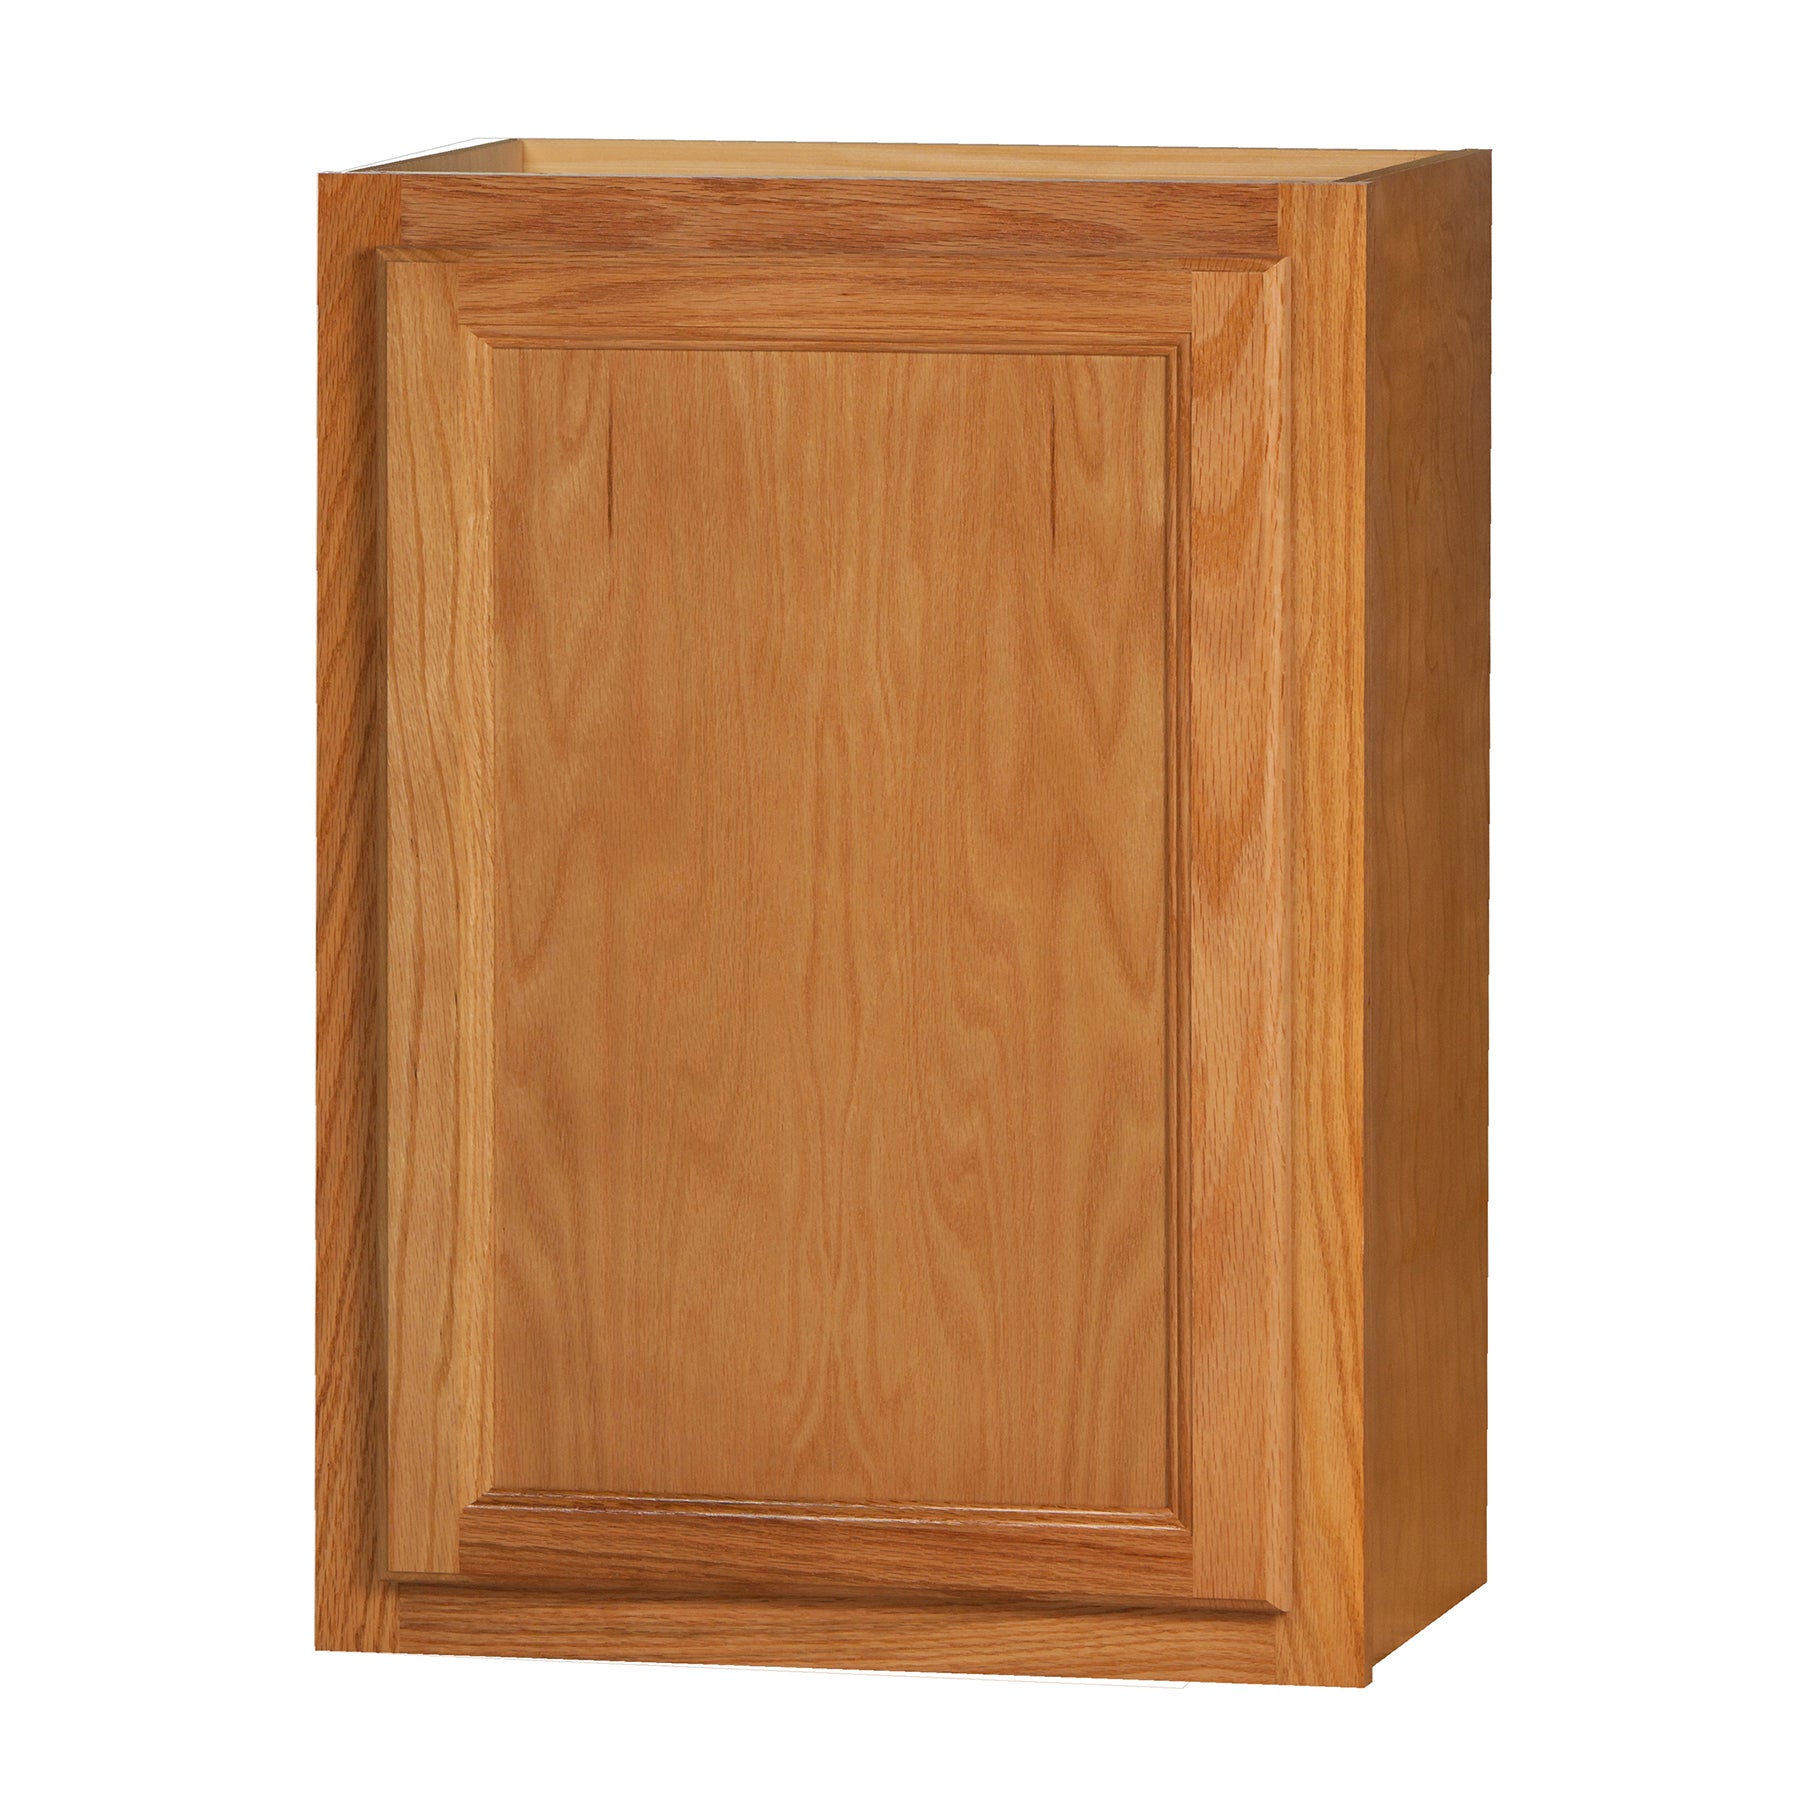 30 inch Wall Cabinets - Single Door - Chadwood Shaker - 21 Inch W x 30 Inch H x 12 Inch D